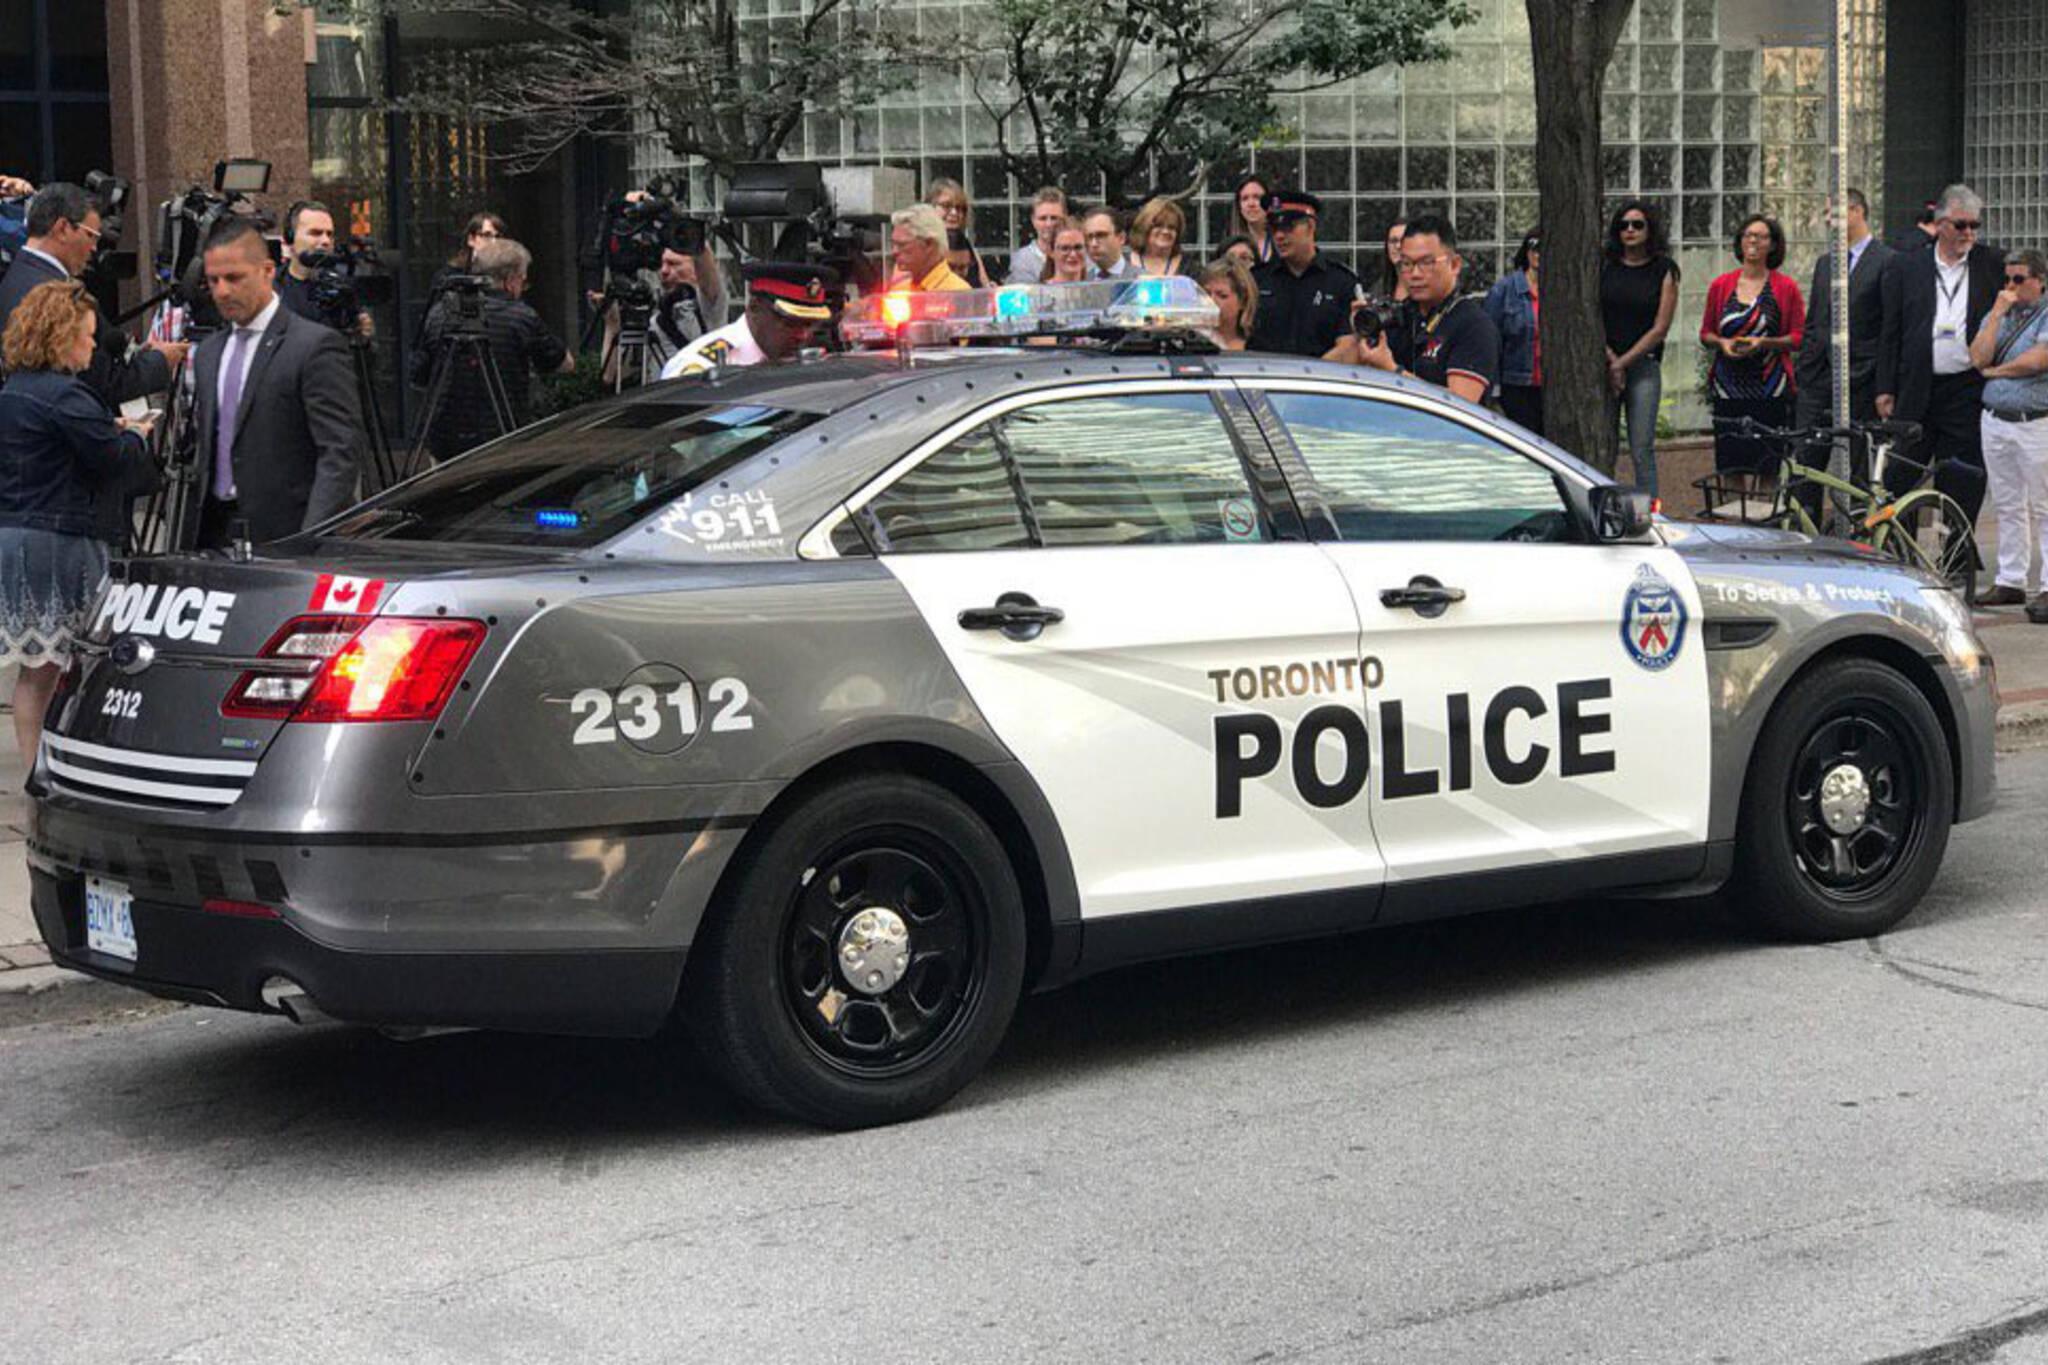 Toronto police cars just got a design makeover